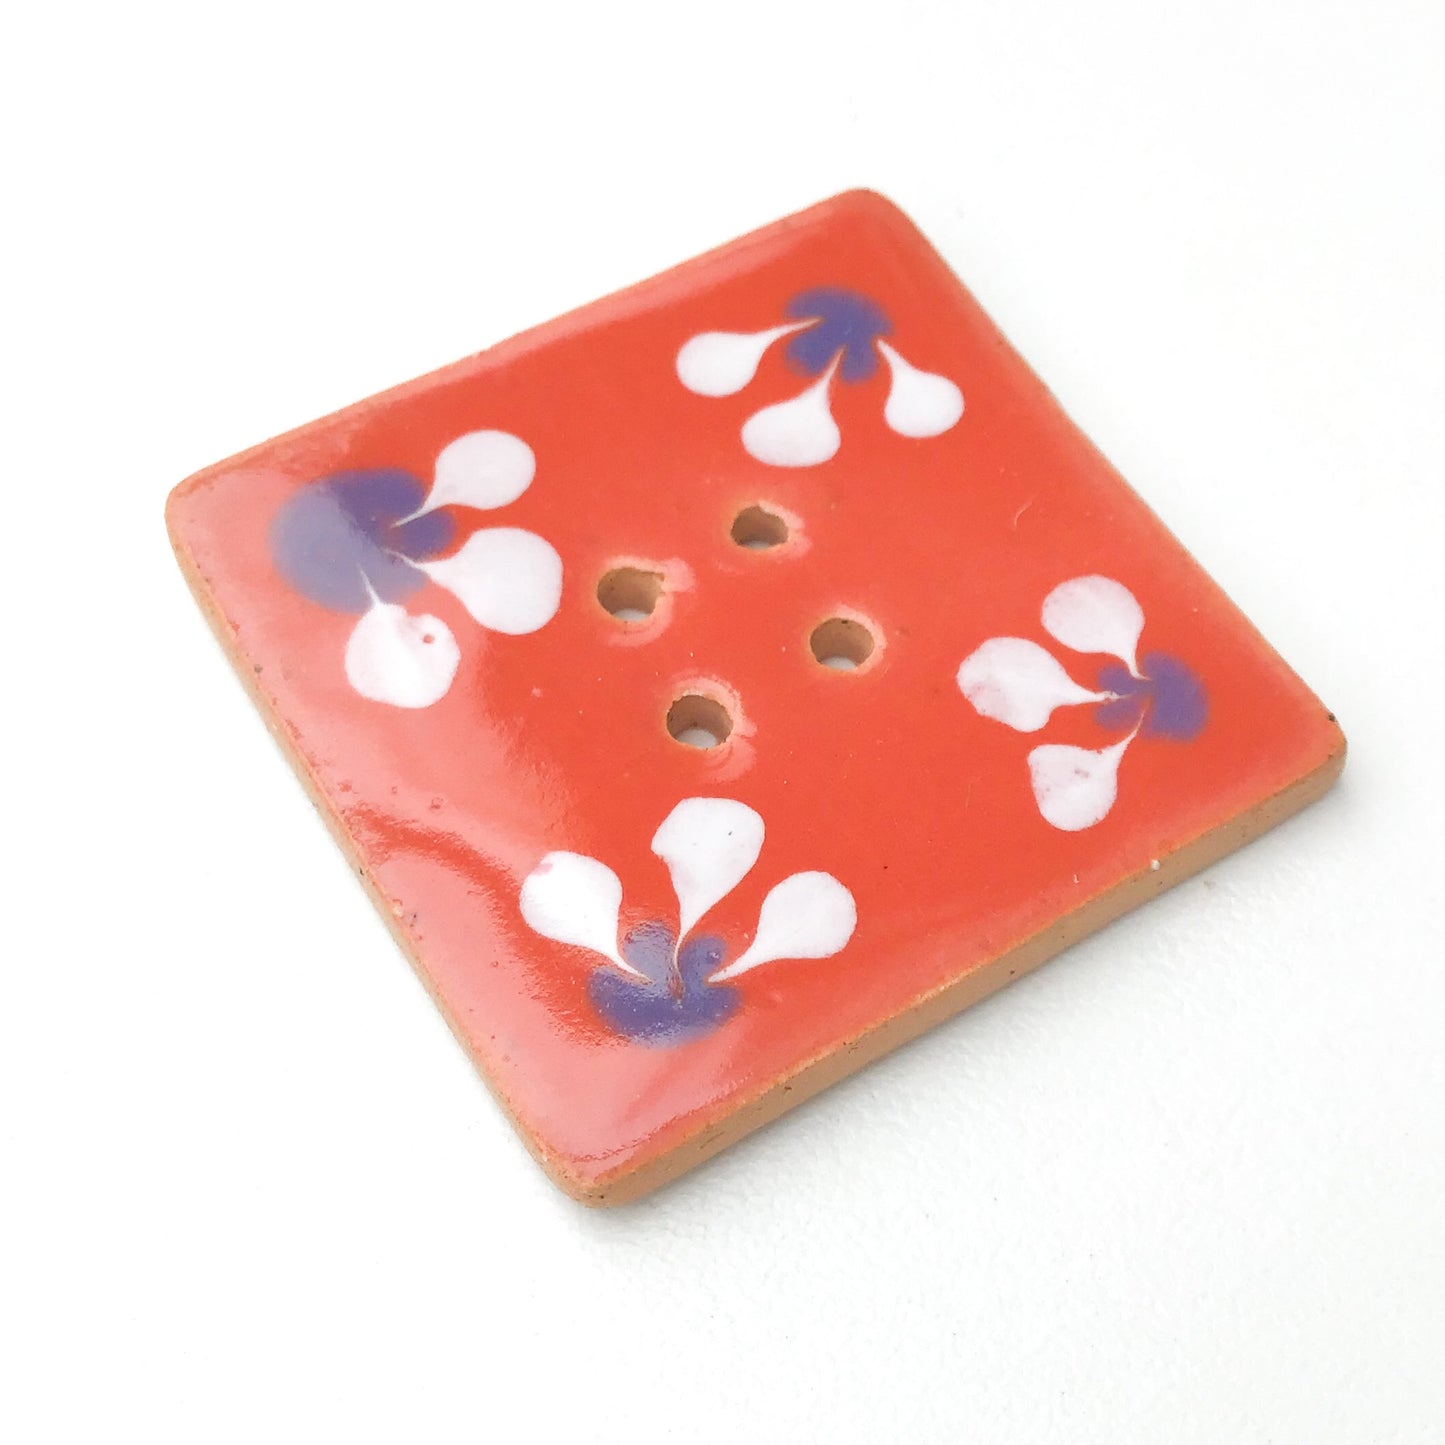 Large Square Decorative Button - Pinkish-Orange - Periwinkle - White - Art Button - 1 7/16"